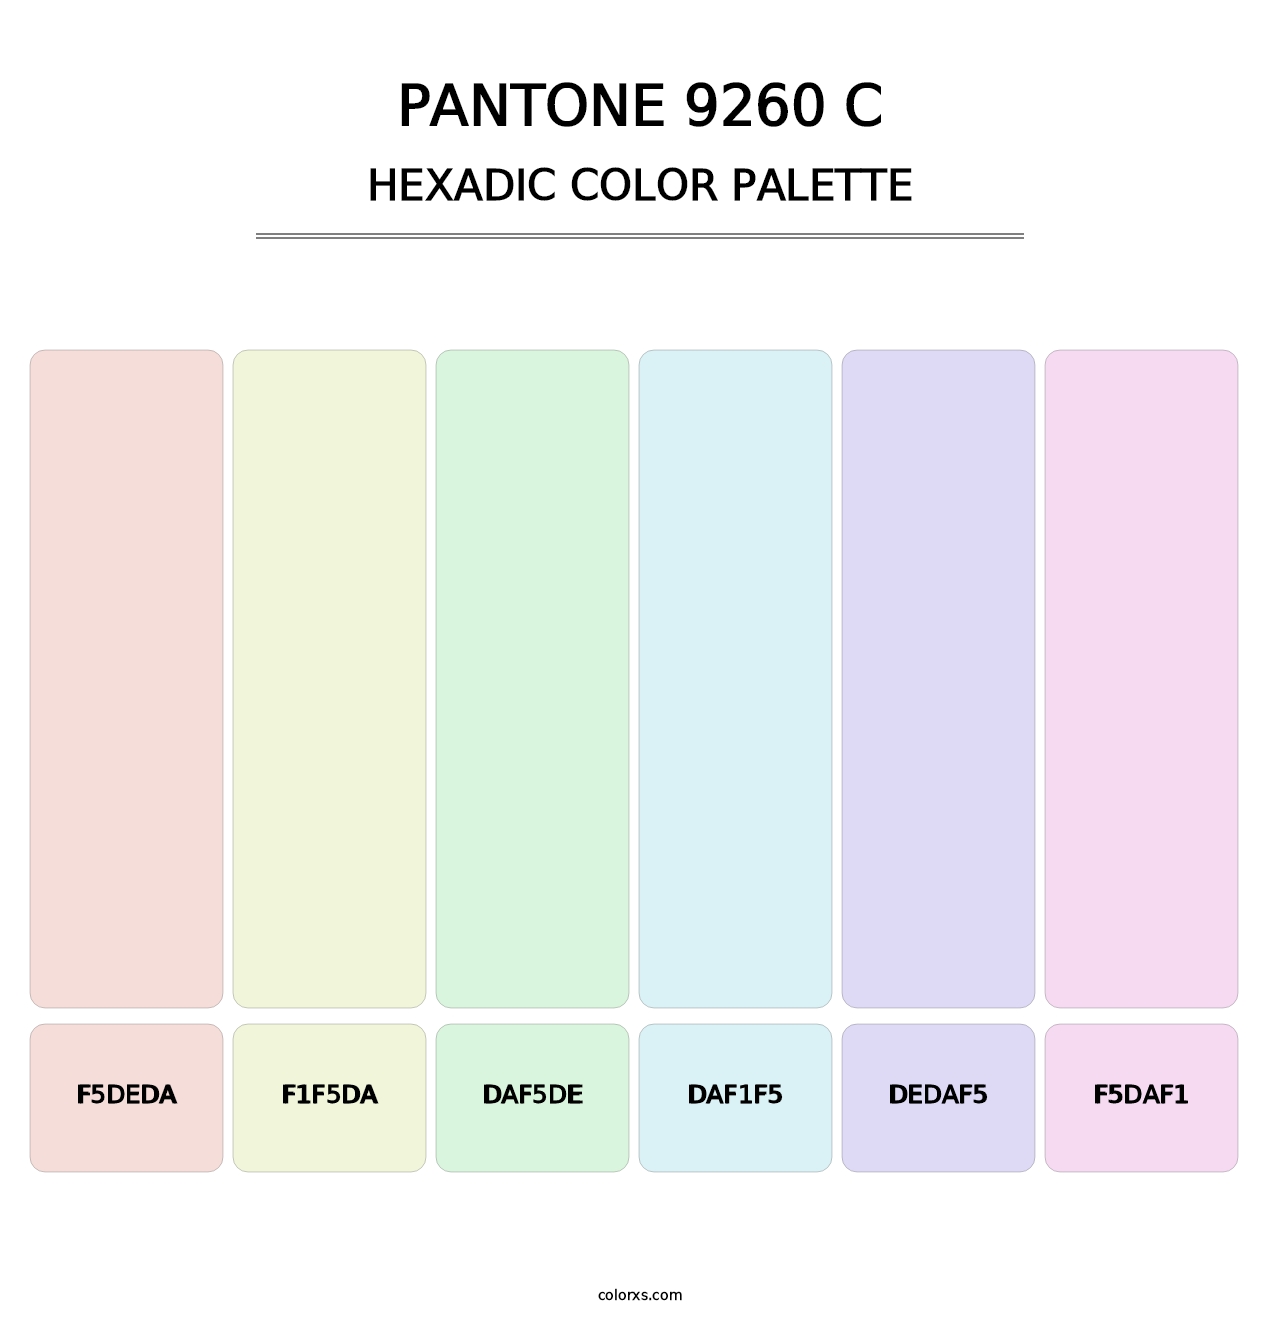 PANTONE 9260 C - Hexadic Color Palette